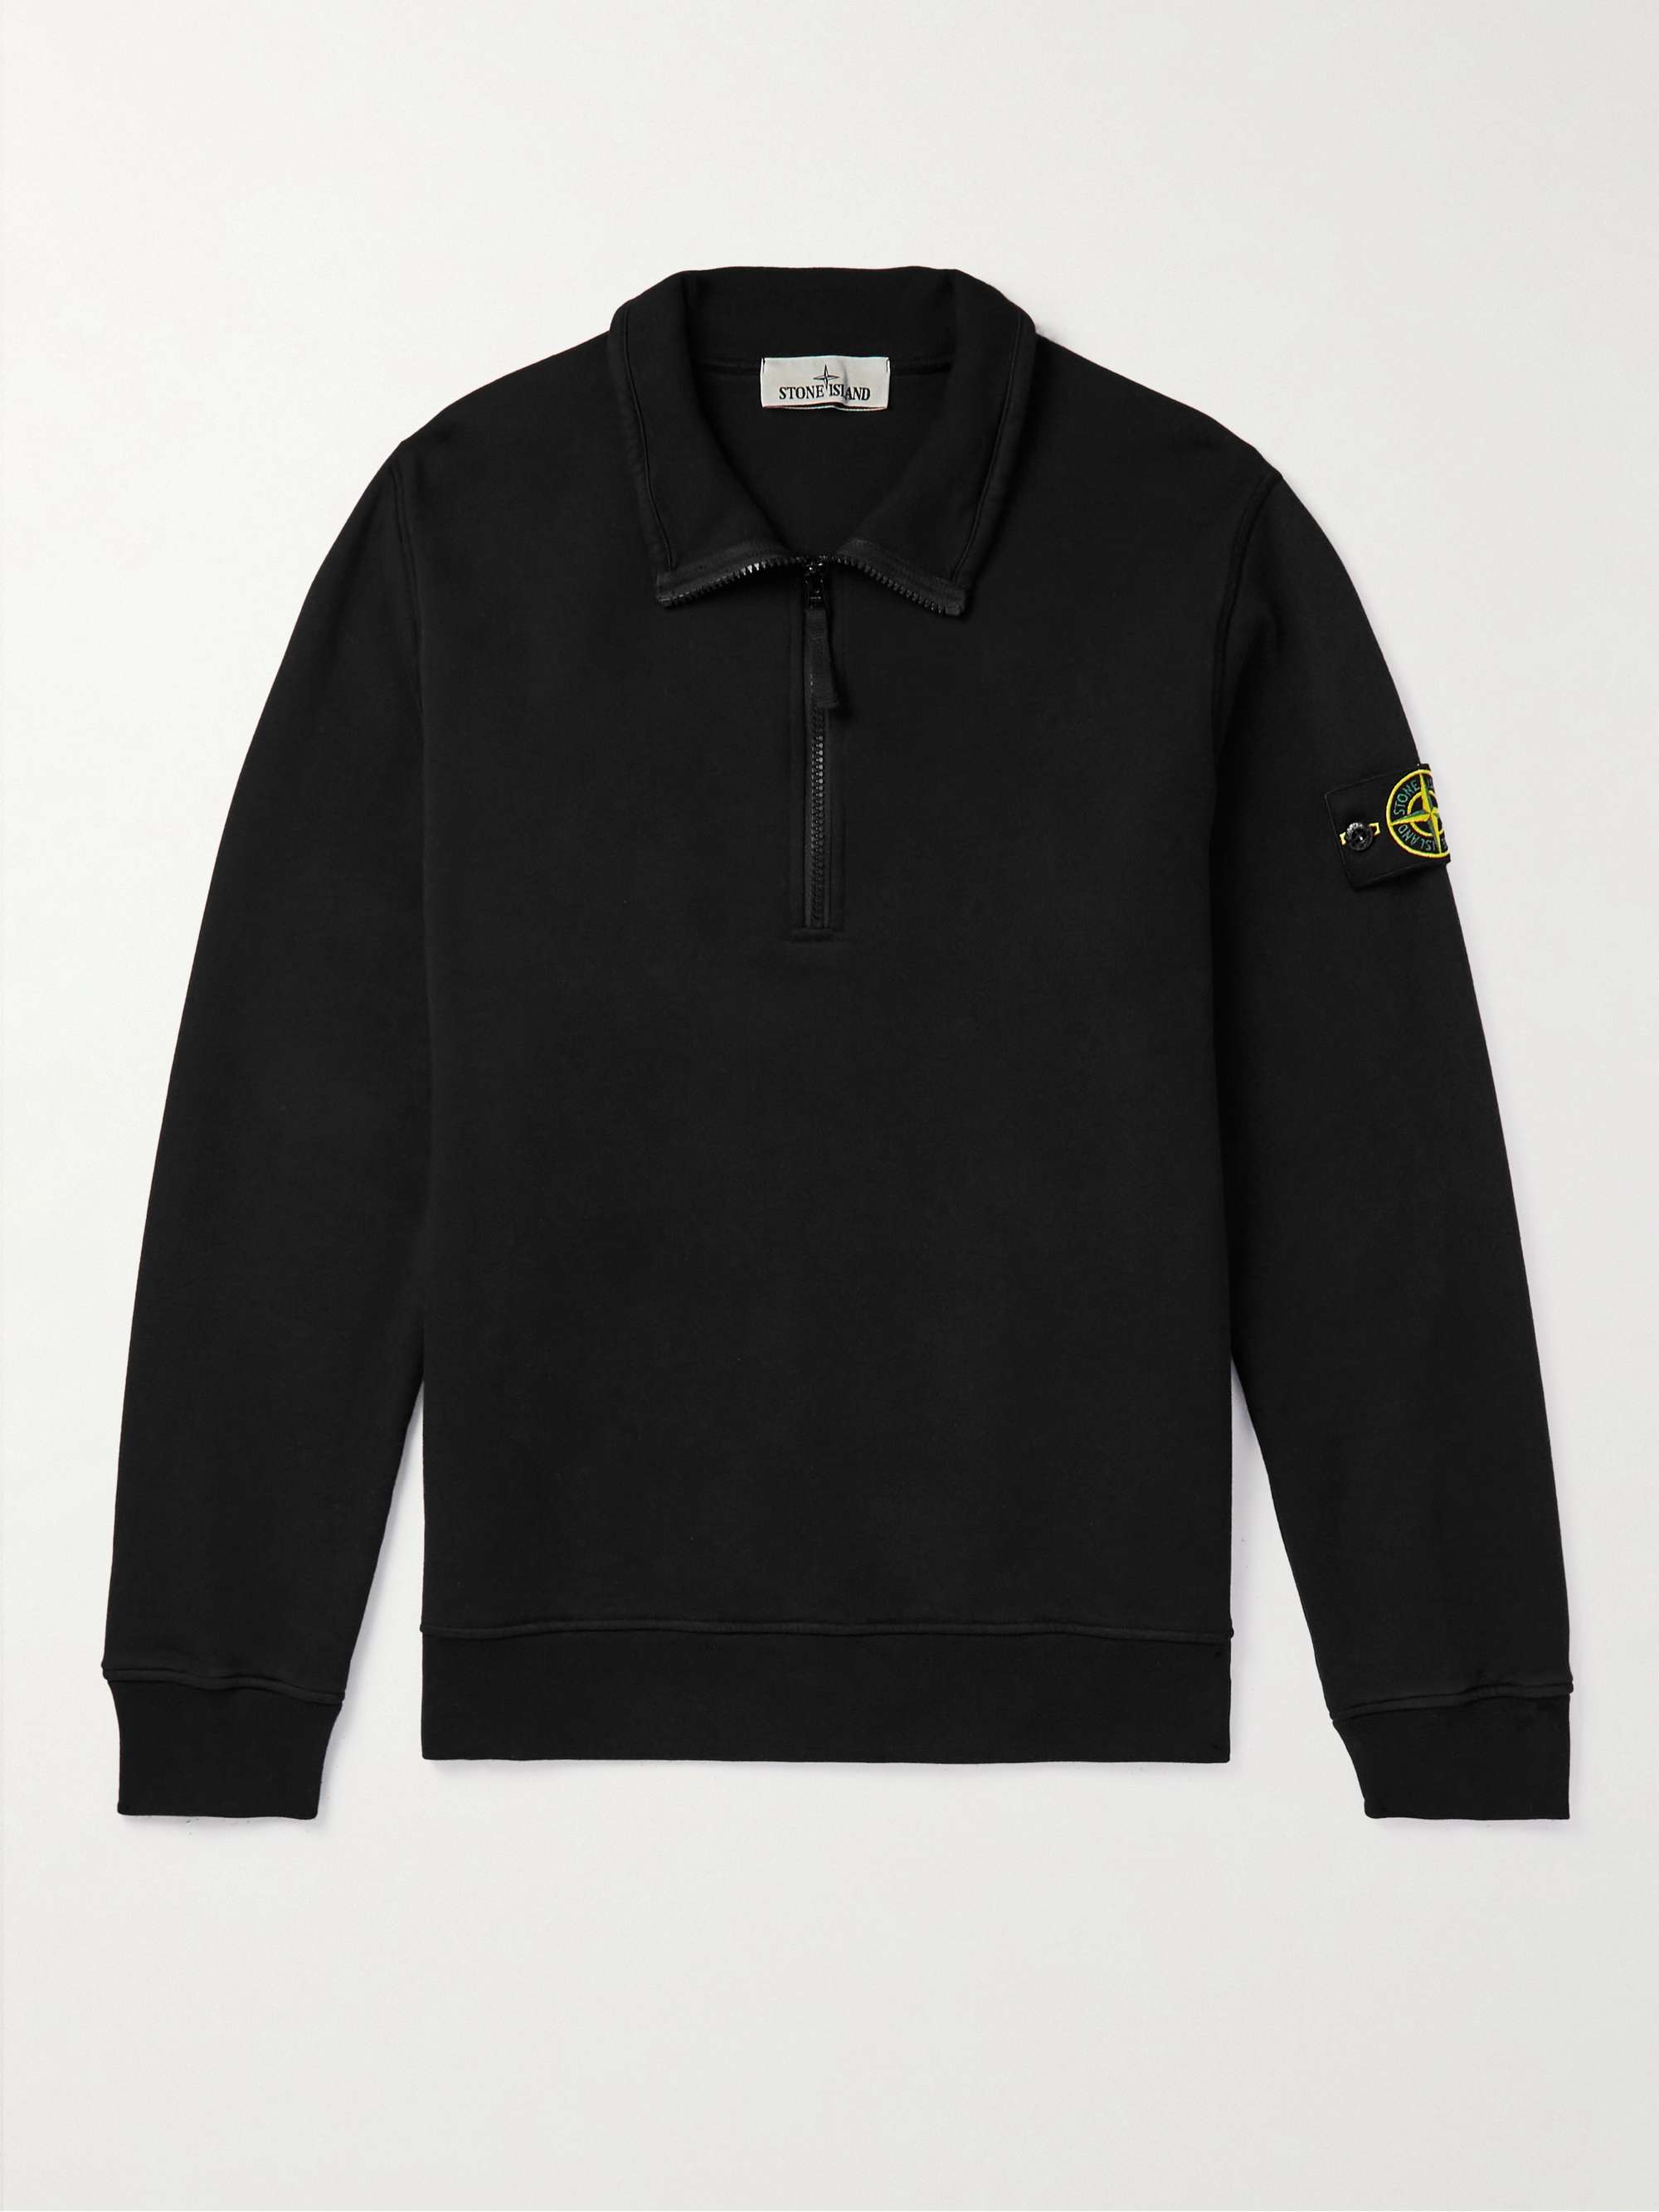 STONE ISLAND Logo-Appliquéd Garment-Dyed Cotton-Jersey Half-Zip Sweatshirt  | MR PORTER